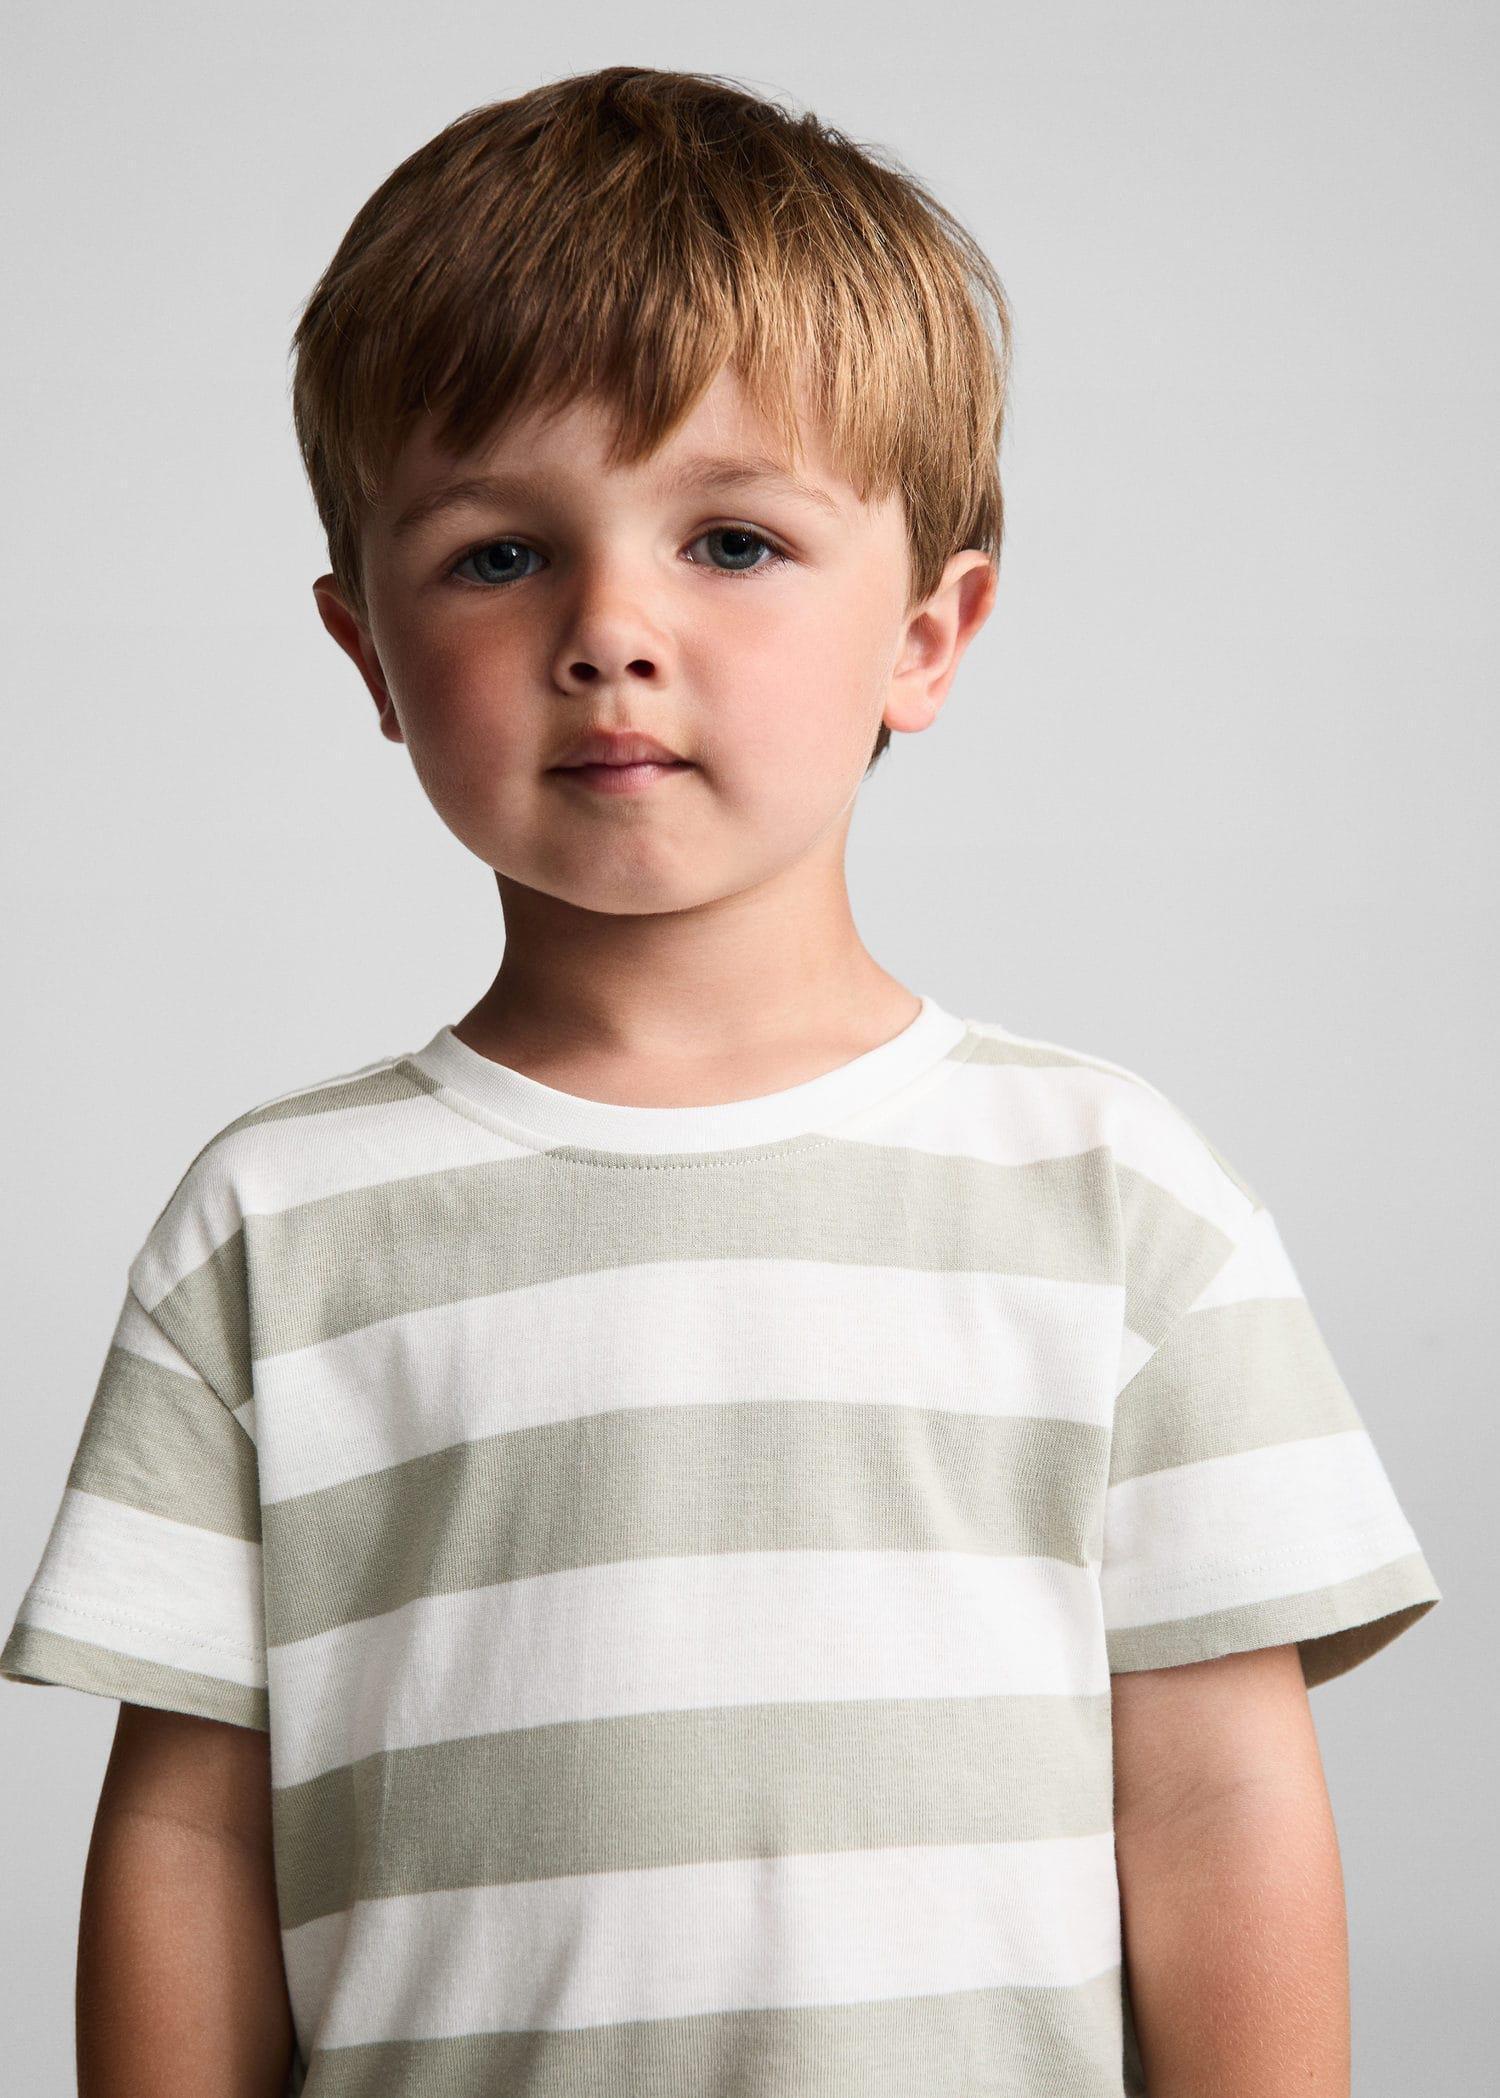 Mango - Green Striped T-Shirt, Kids Boys